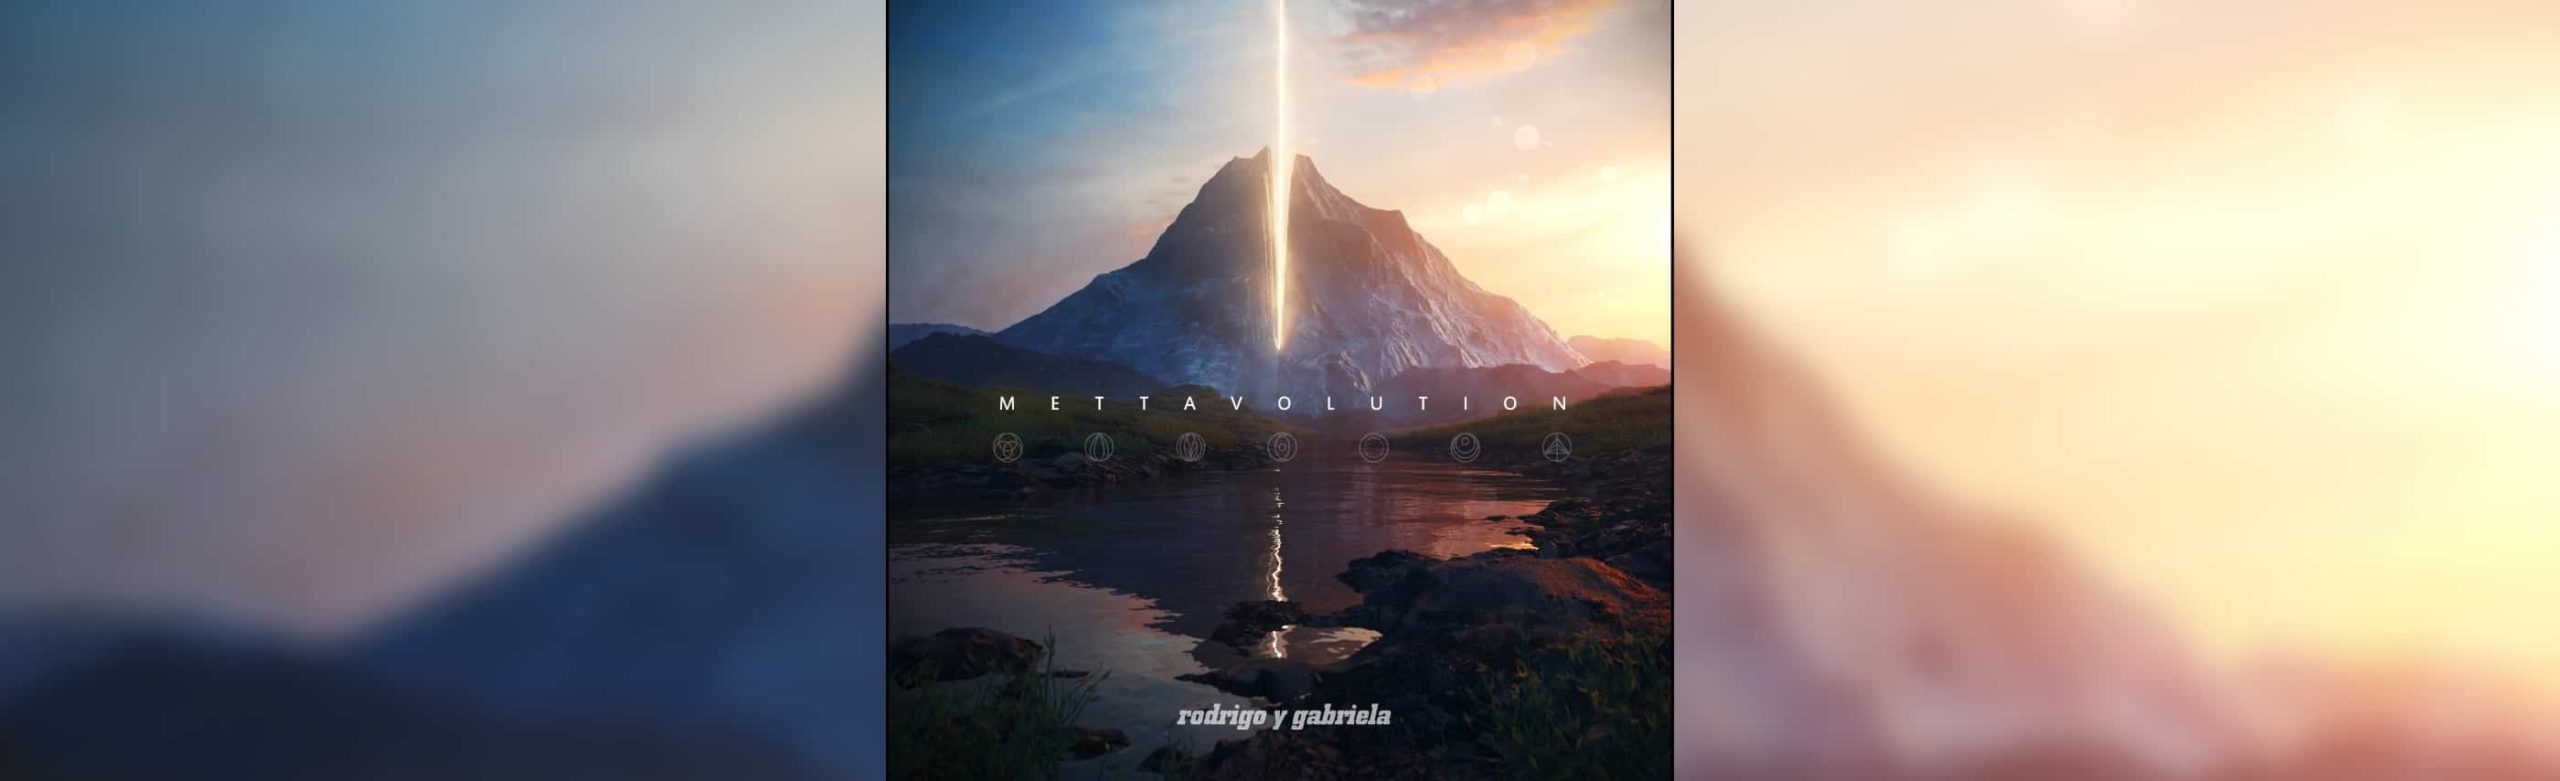 Rodrigo y Gabriela Unveil New Album “Mettavolution” Image